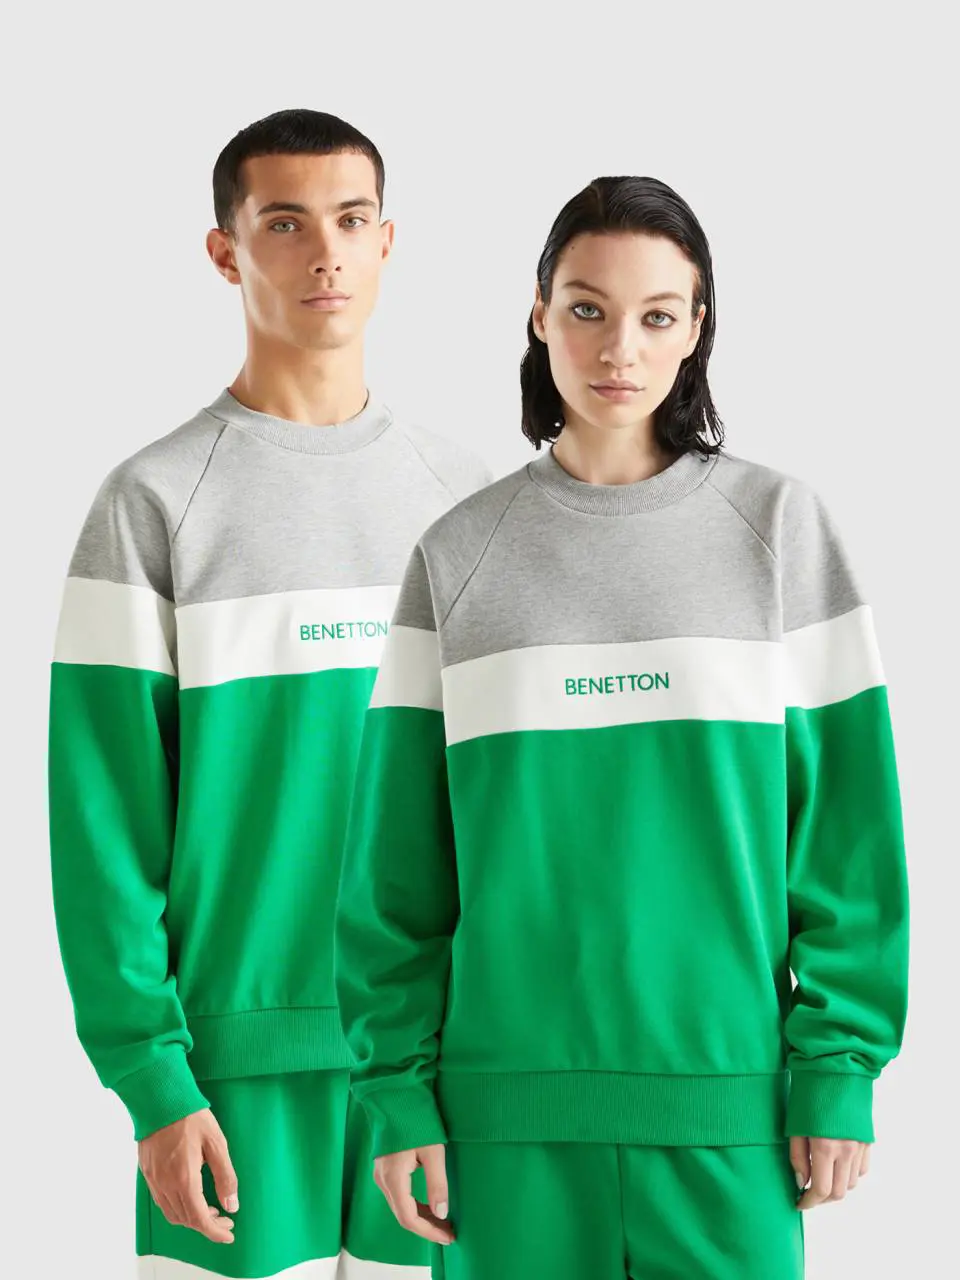 Benetton green and light gray sweatshirt. 1